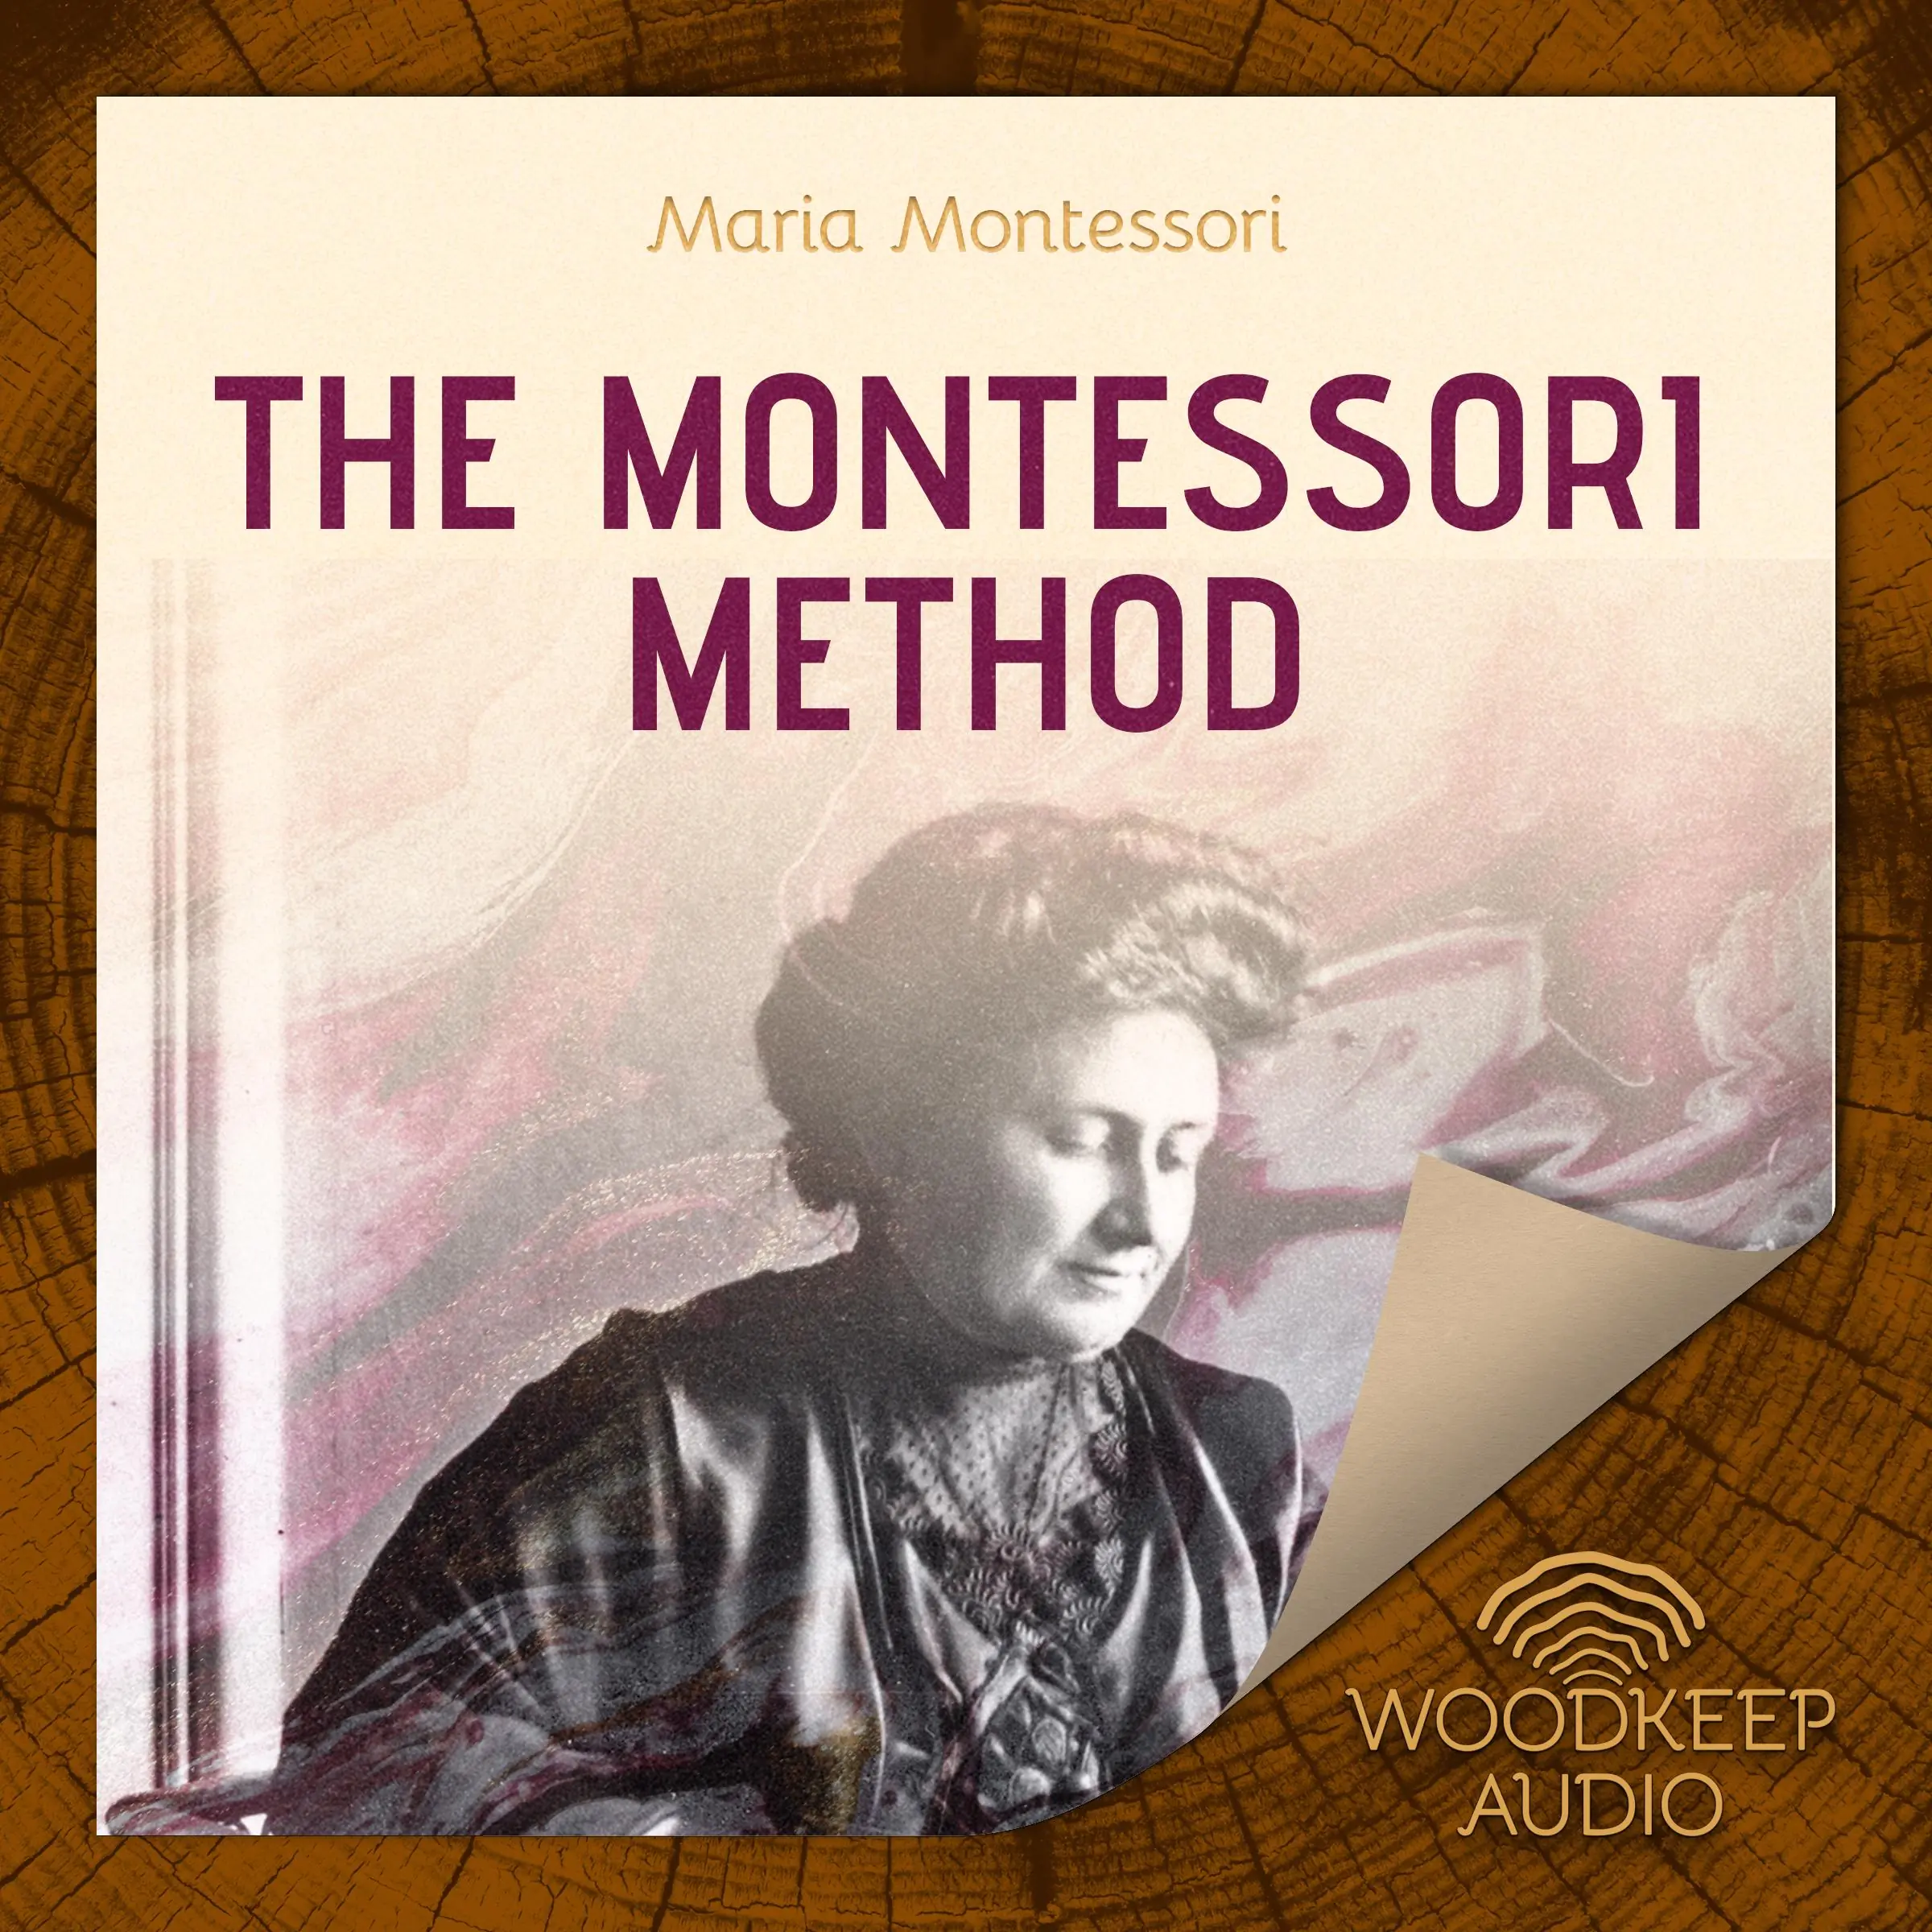 The Montessori Method Audiobook by Maria Montessori